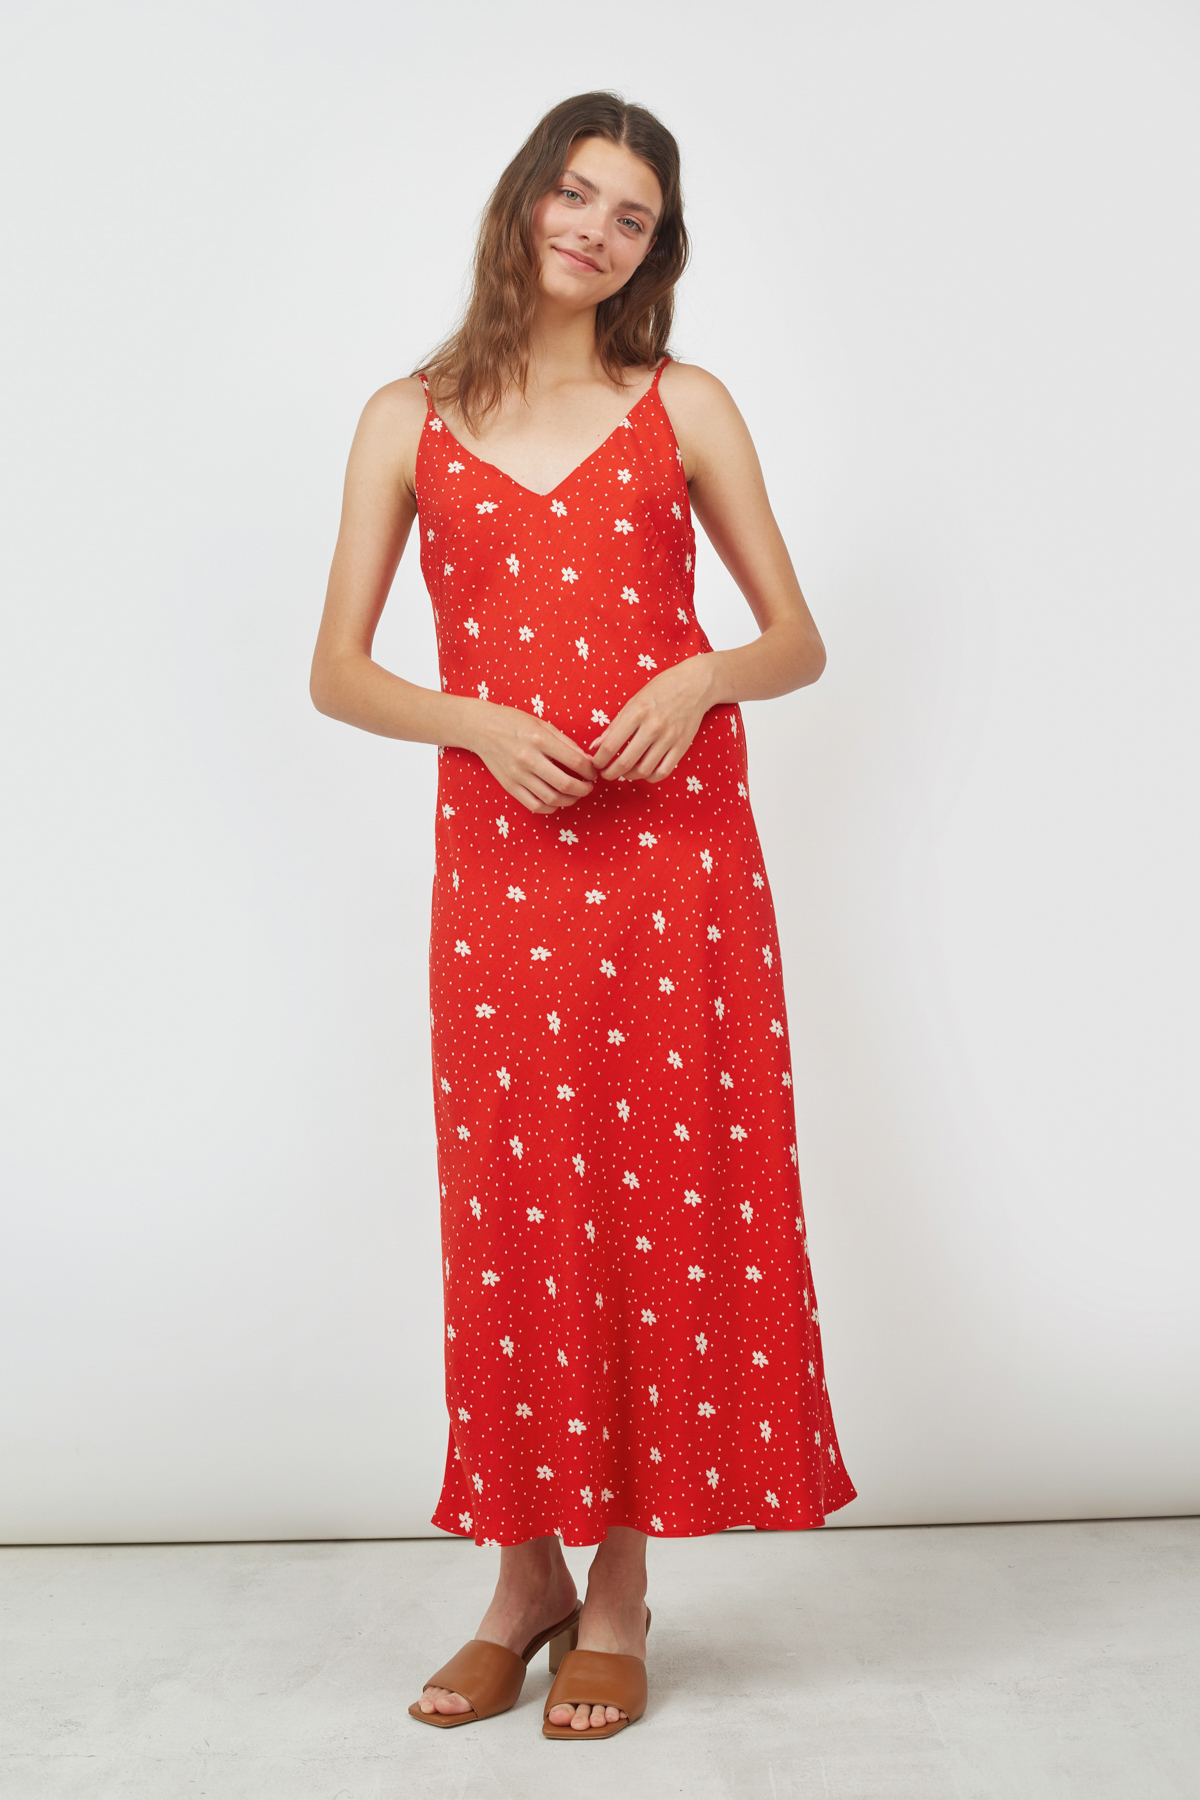 Viscose red slip dress in print flowers, photo 1